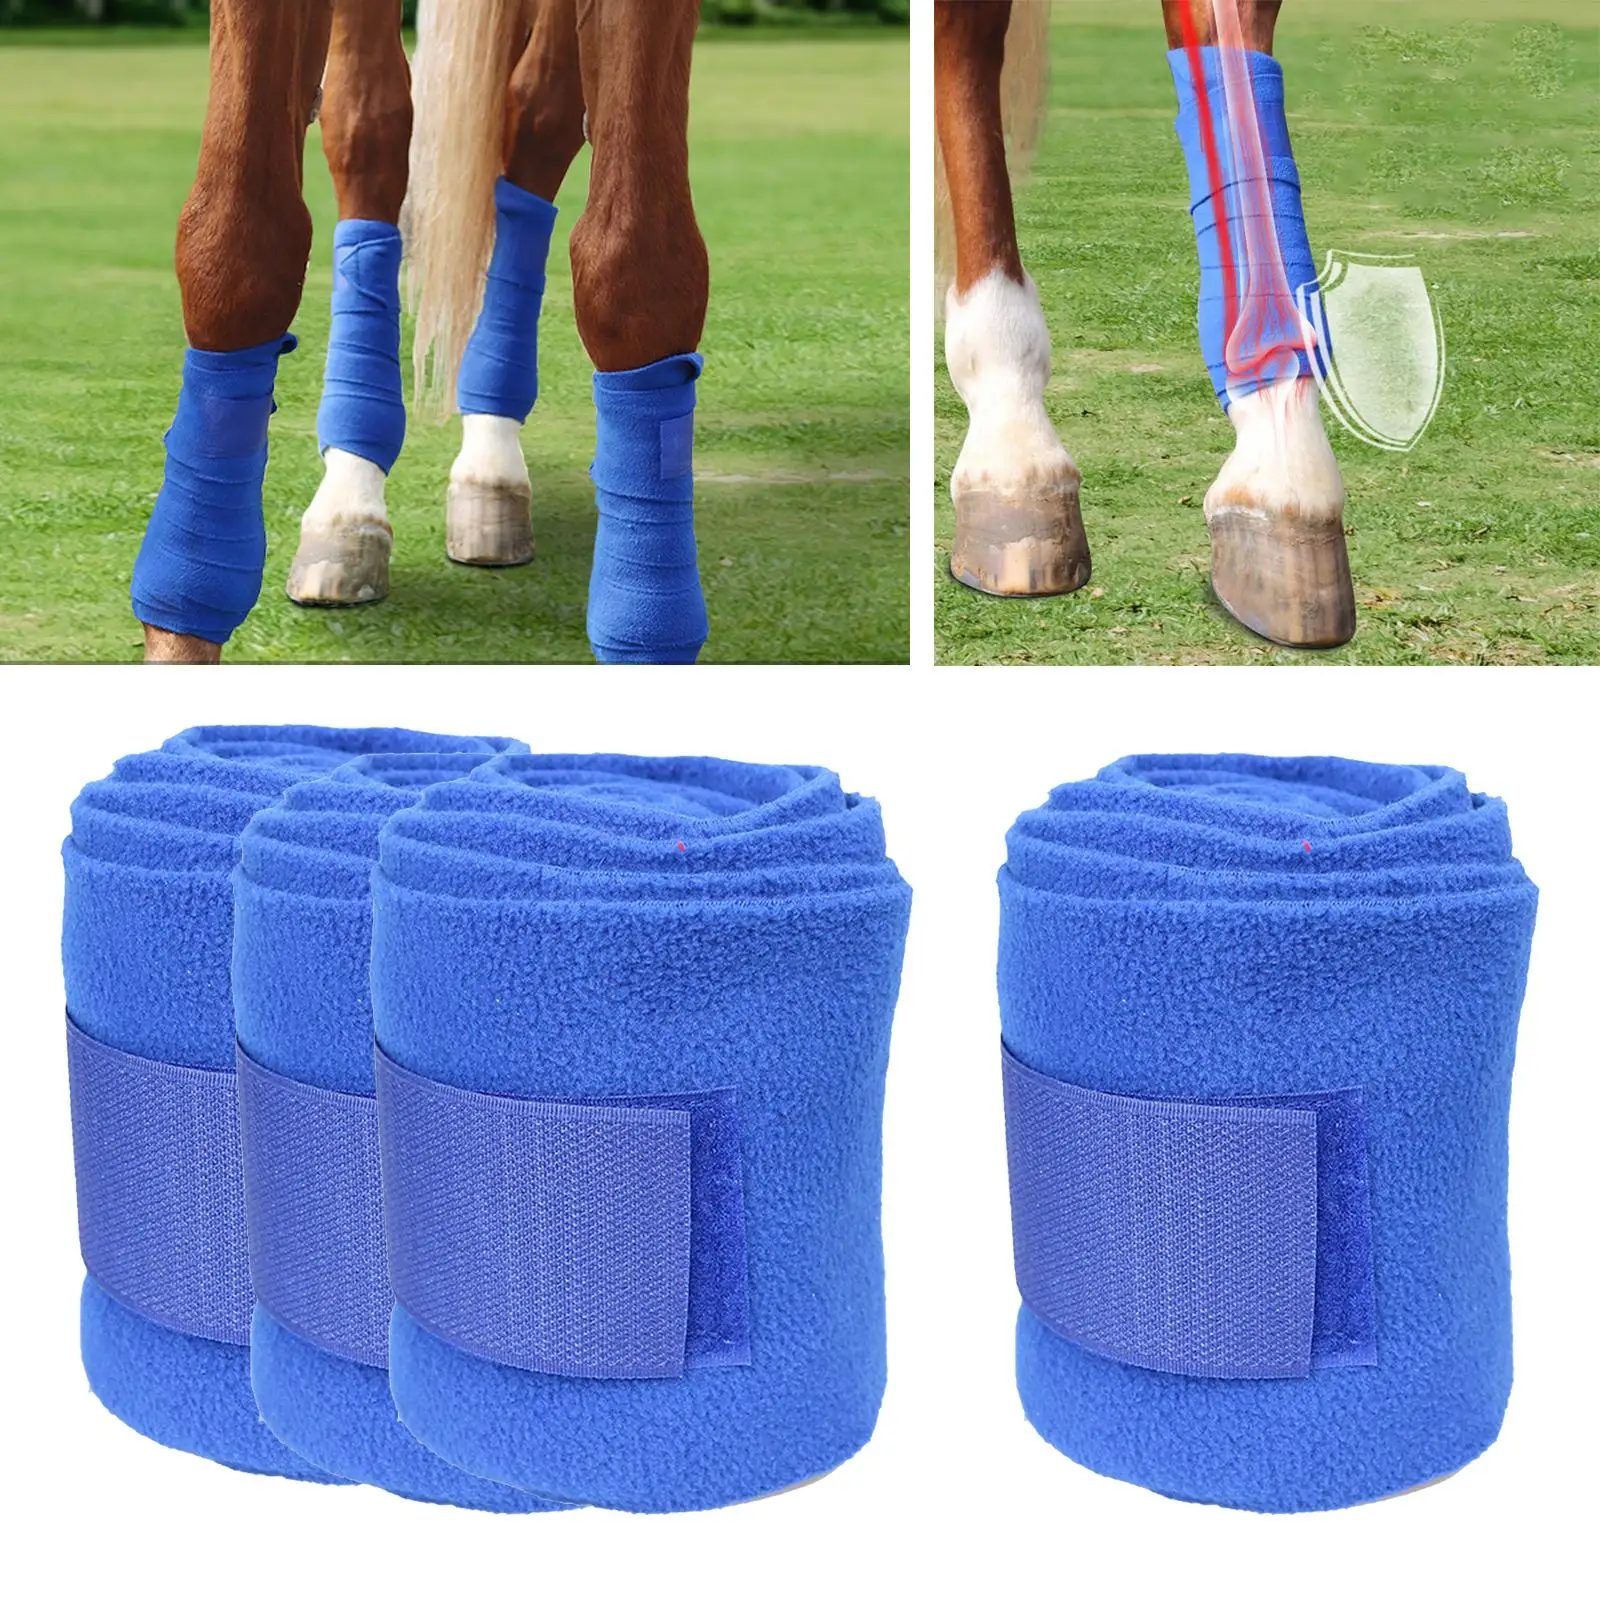 4 Pieces Horse Leg Wraps  Legging Wrap  Bandage Set Riding Racing Horse Leg  Wraps Leg Guards Equestrian Equipment